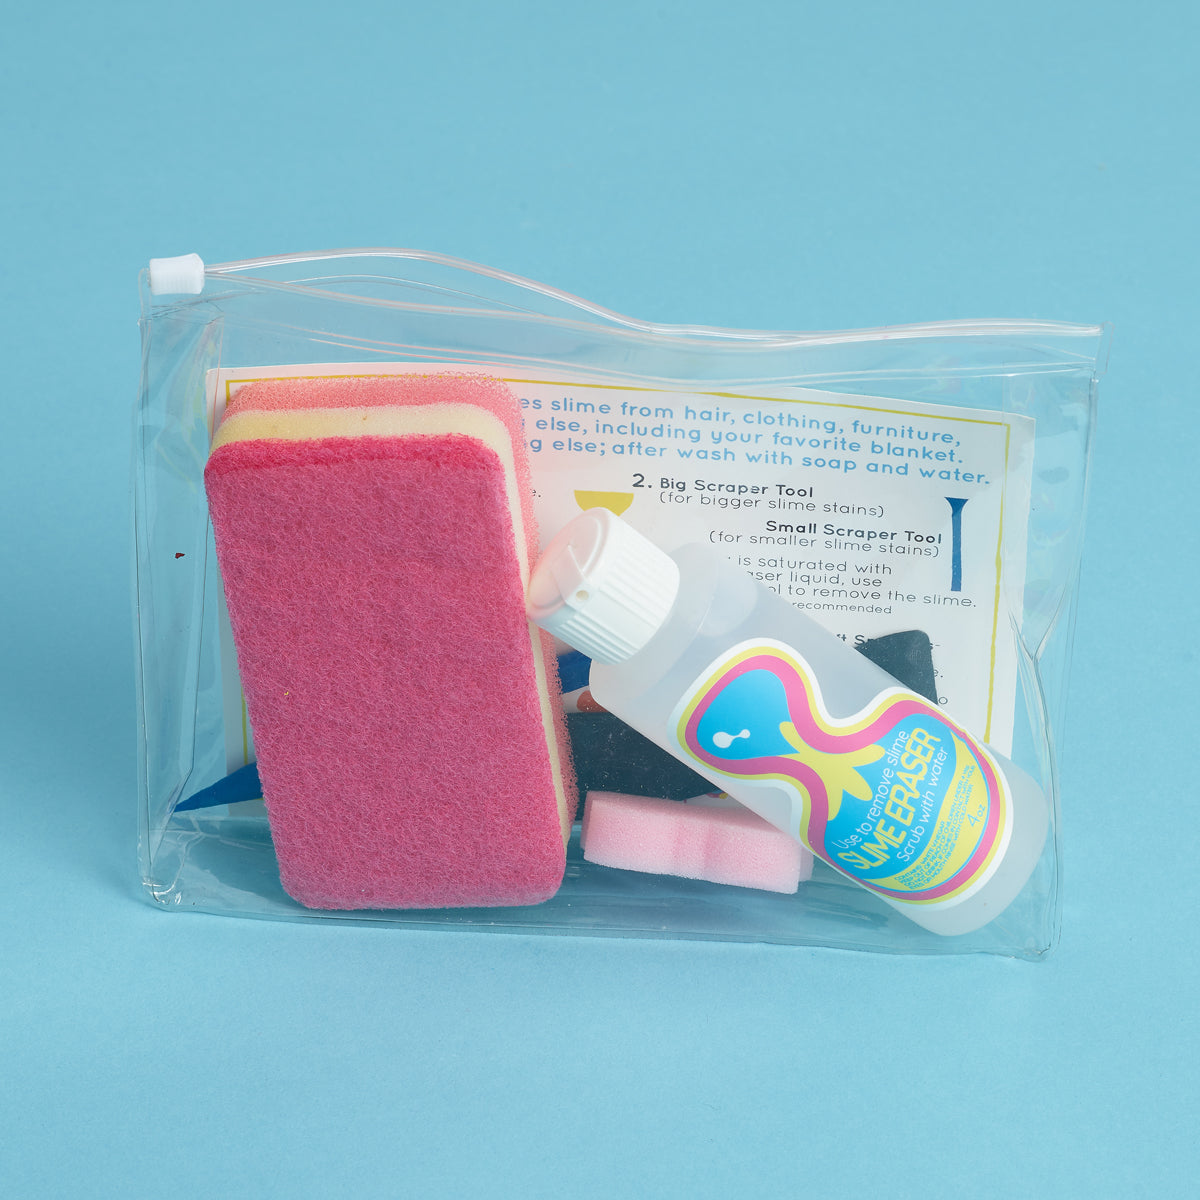 Slime Eraser Kit - Sloomooinstitute